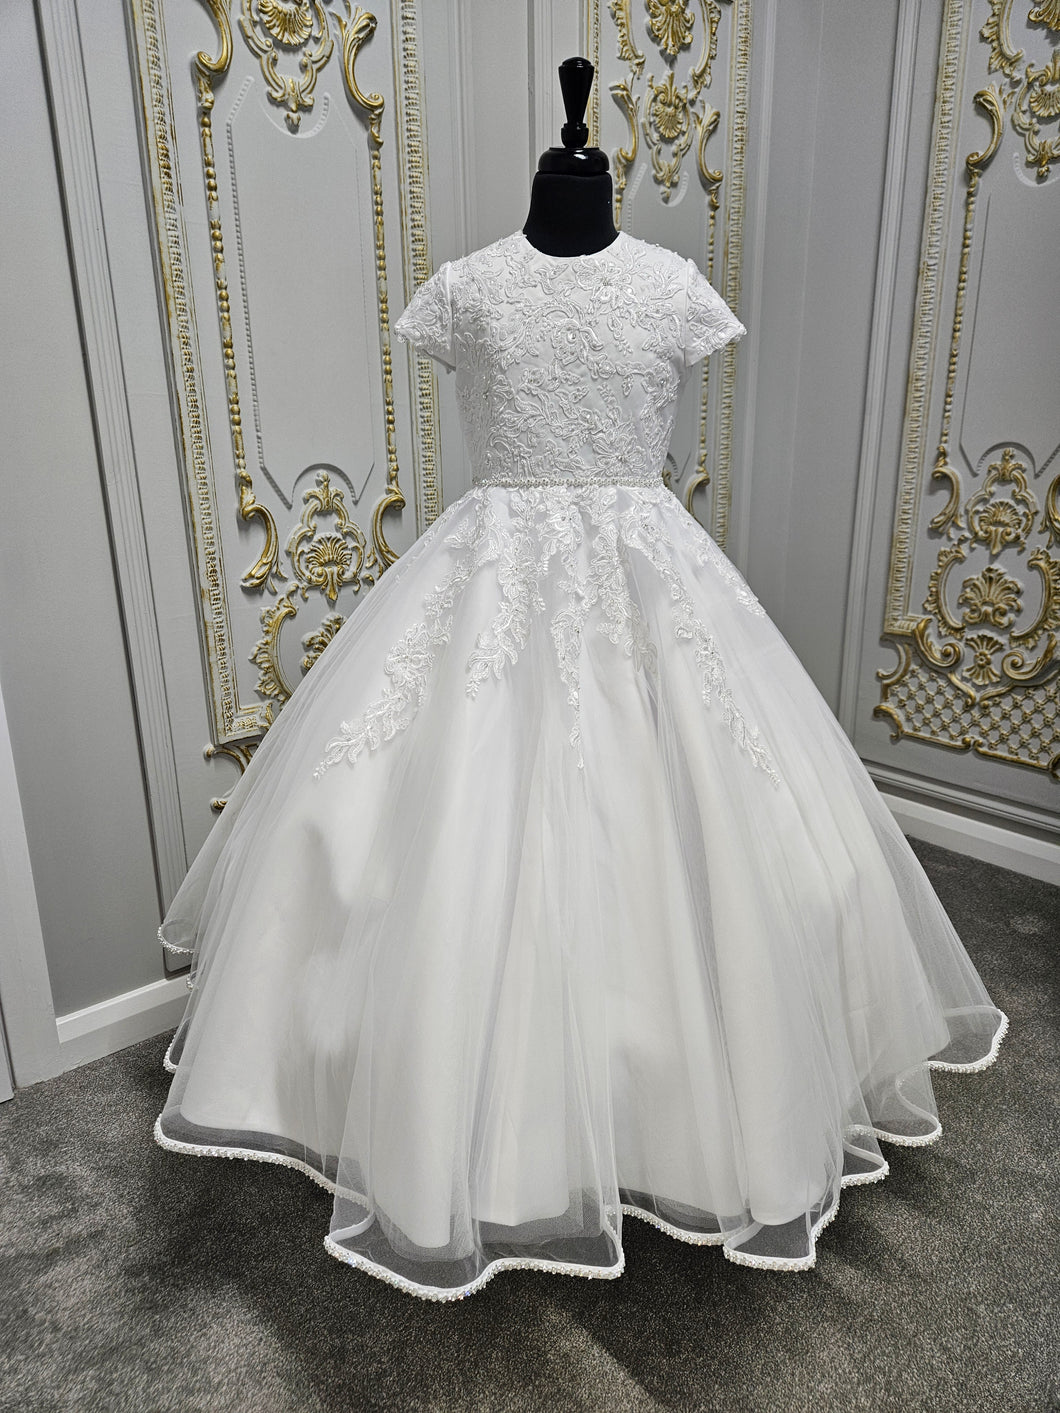 SALE Little People Girls White Communion Dress:- Xia 80680